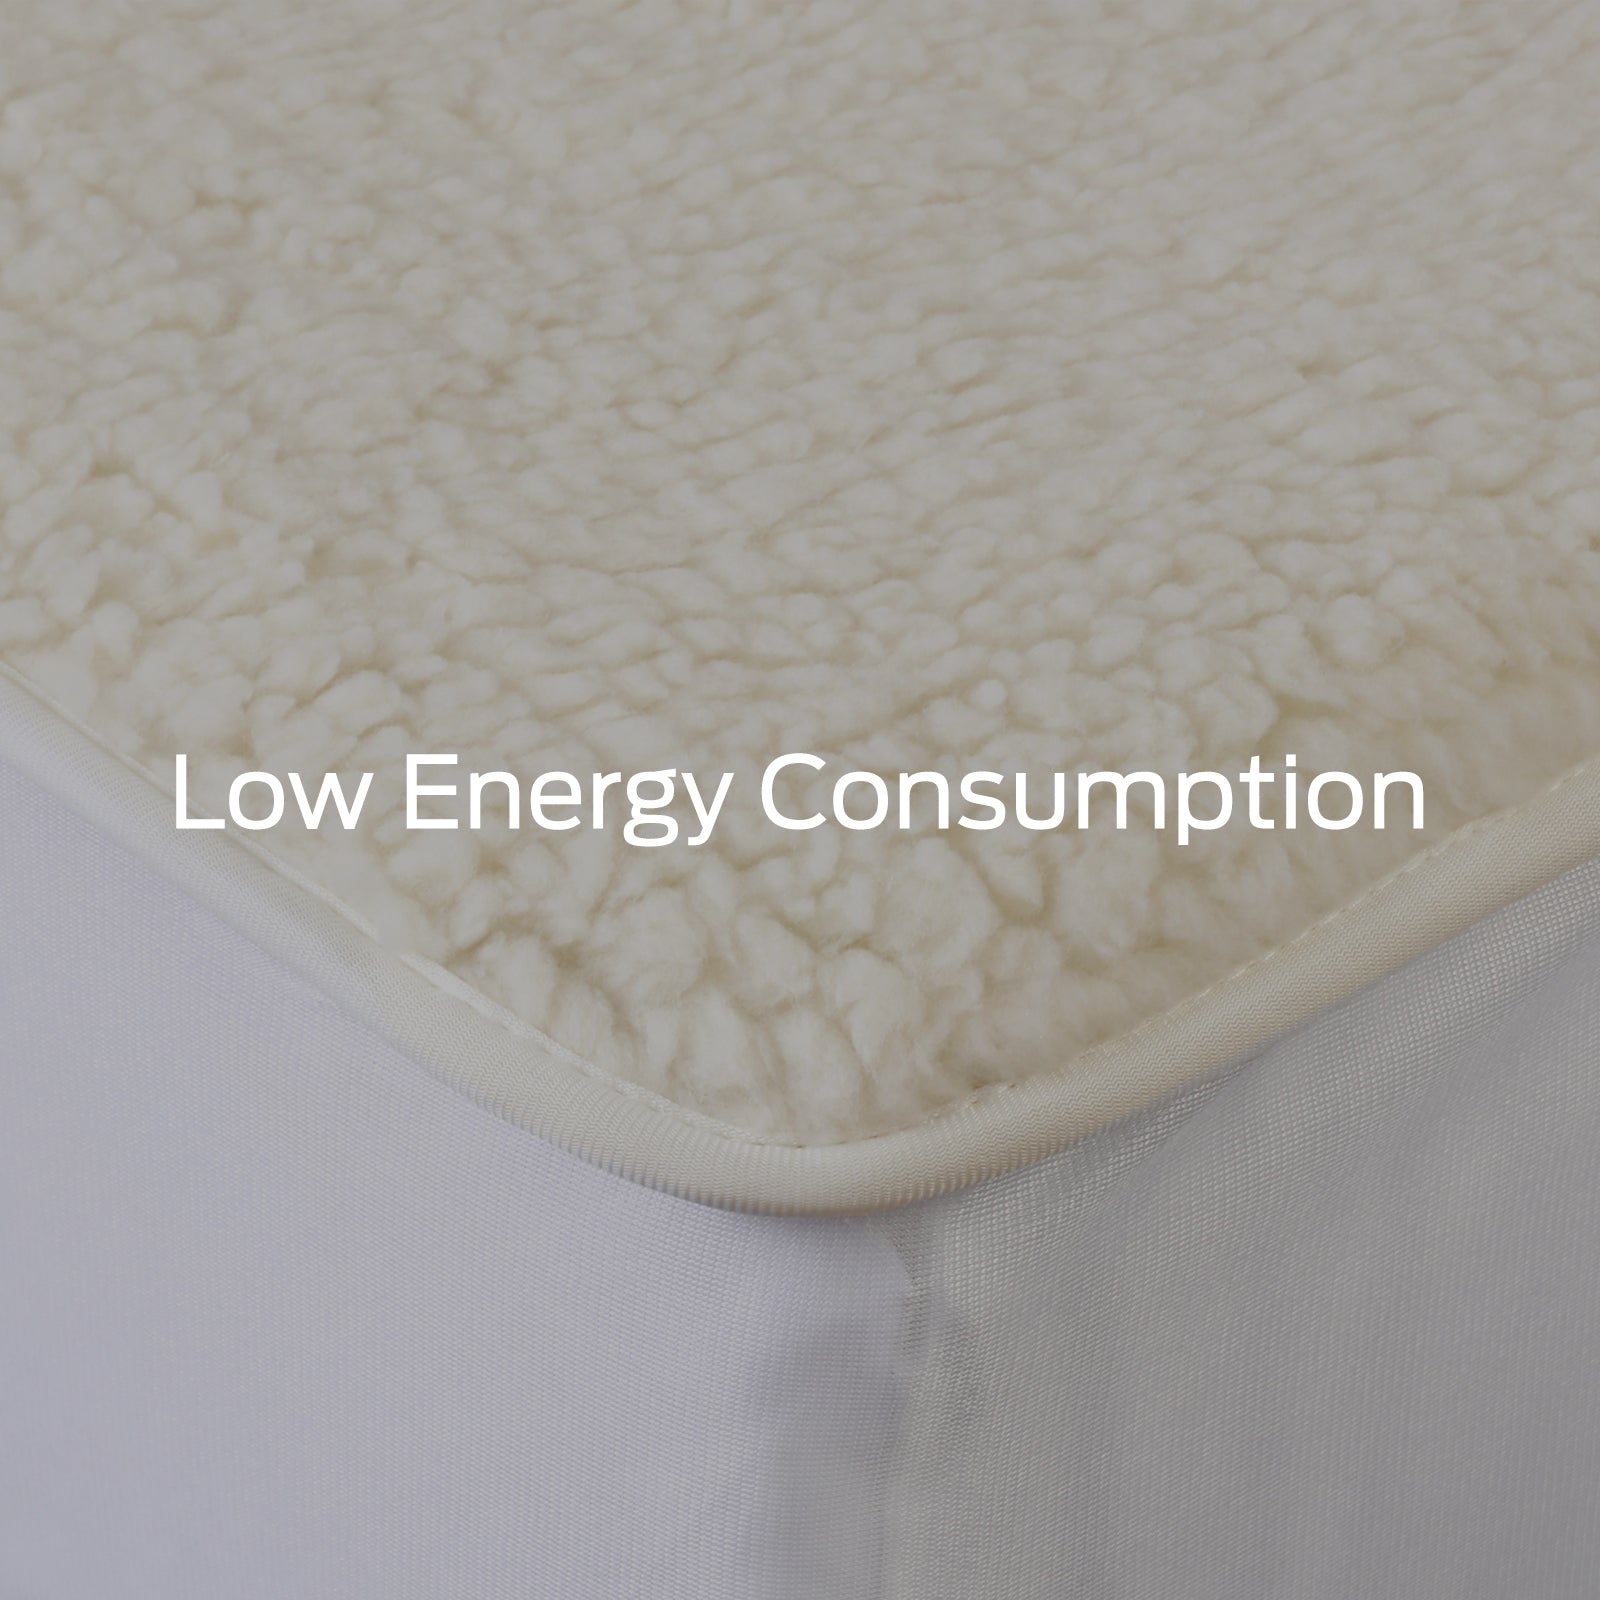 Royal Comfort Fleece Top Electric Blanket Fitted Heated Winter Underlay - Queen - White Deals499